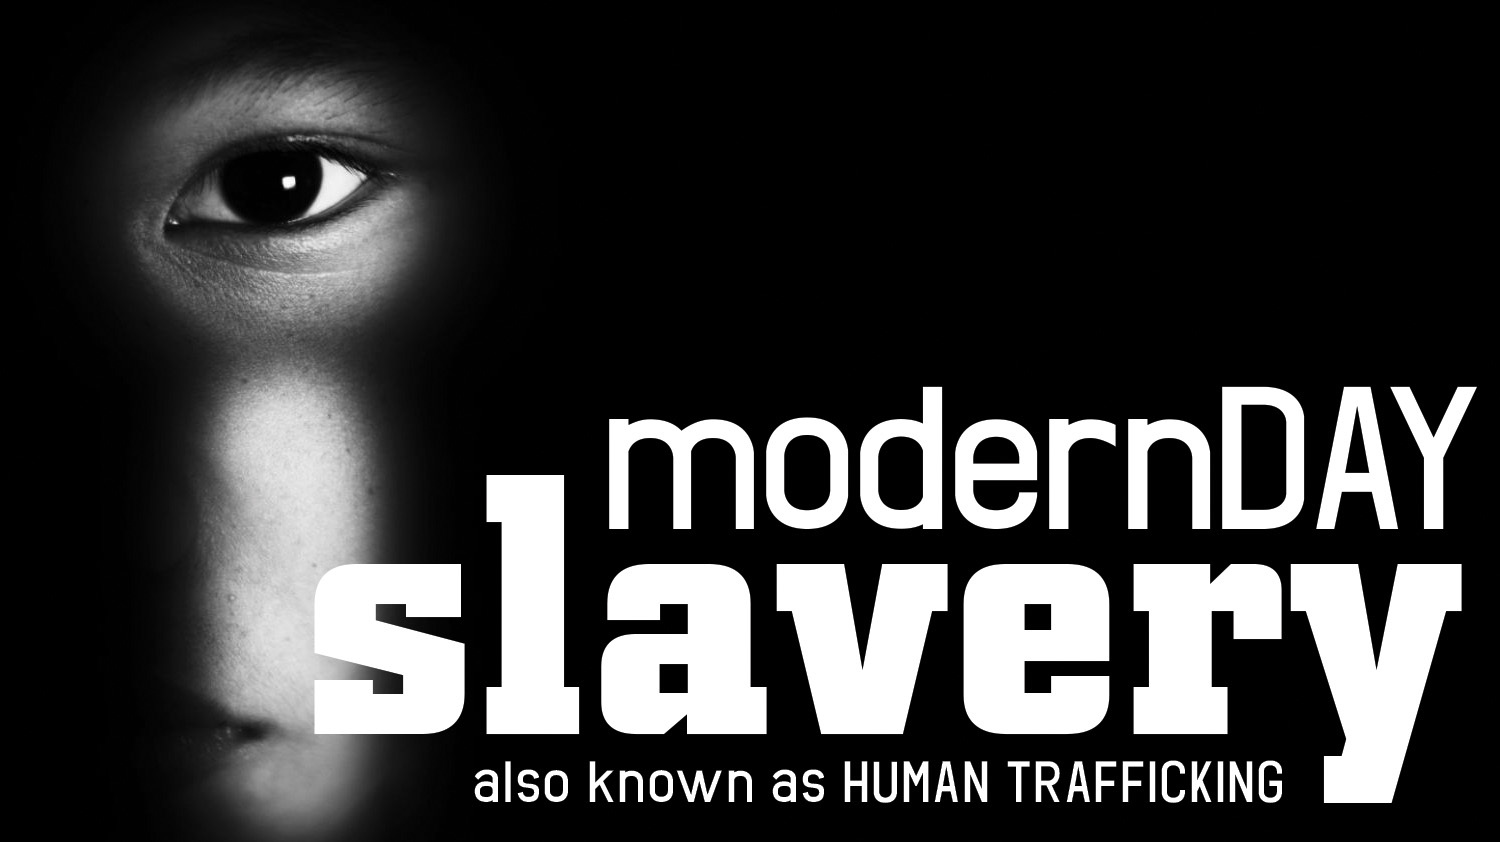 trafficking and slavery